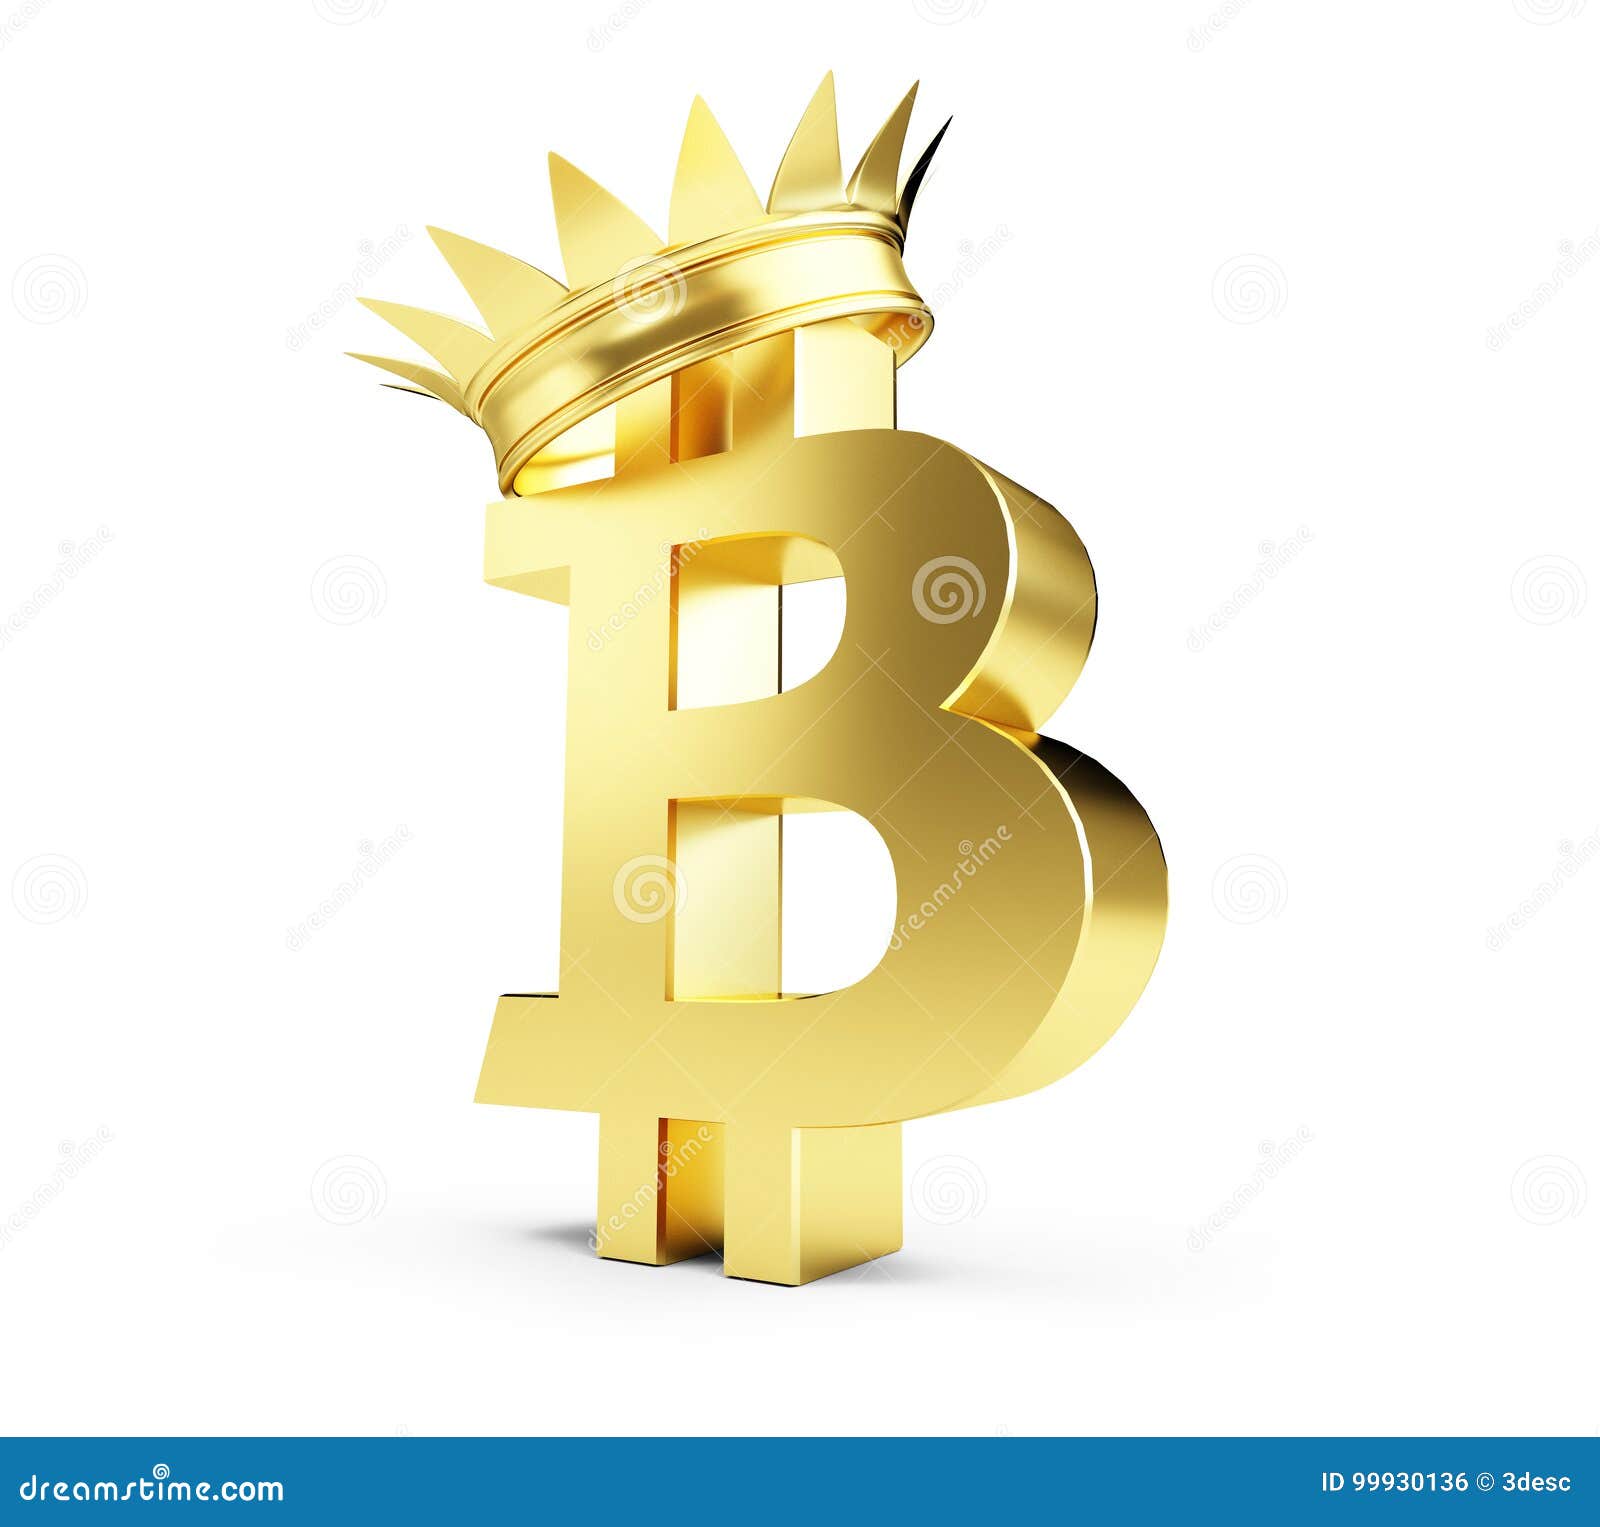 bitcoin crown airdrop